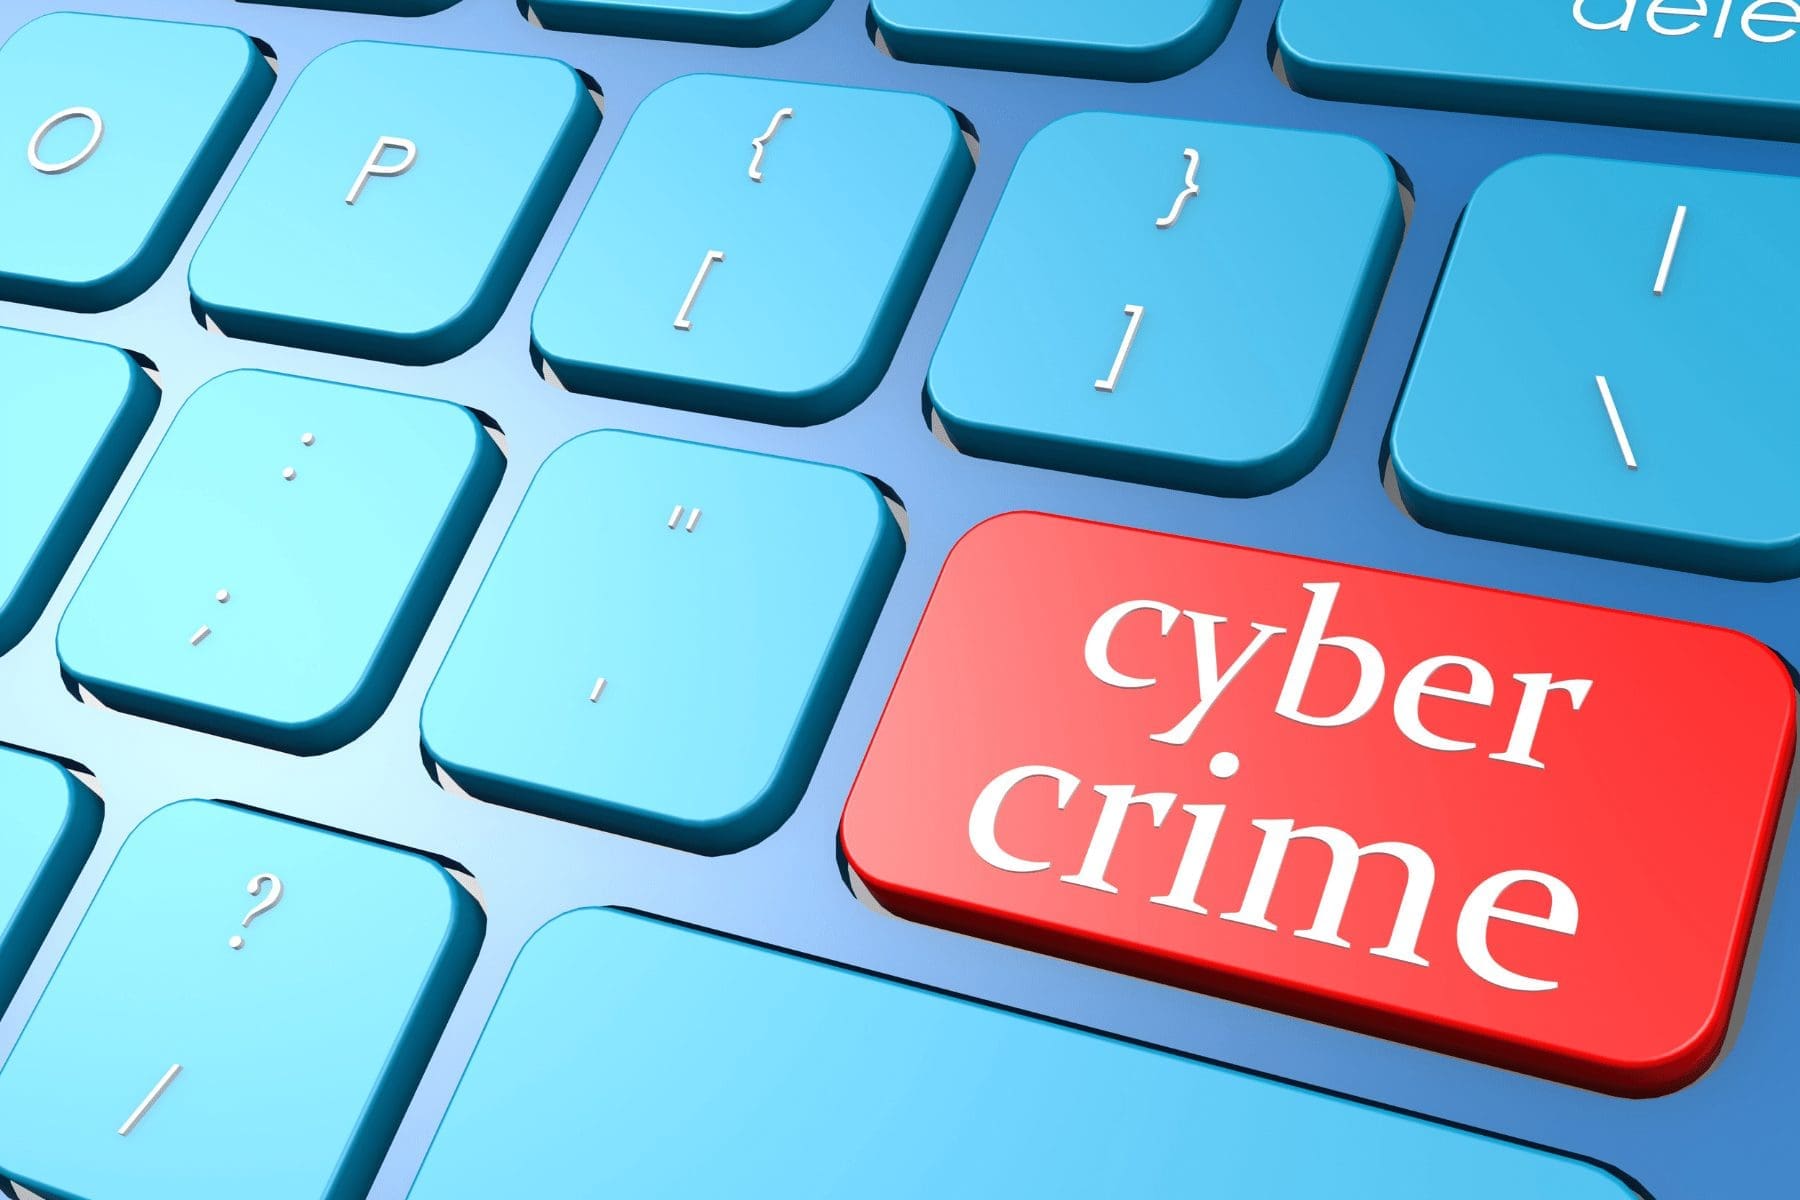 a keyboard with a cyber crime key